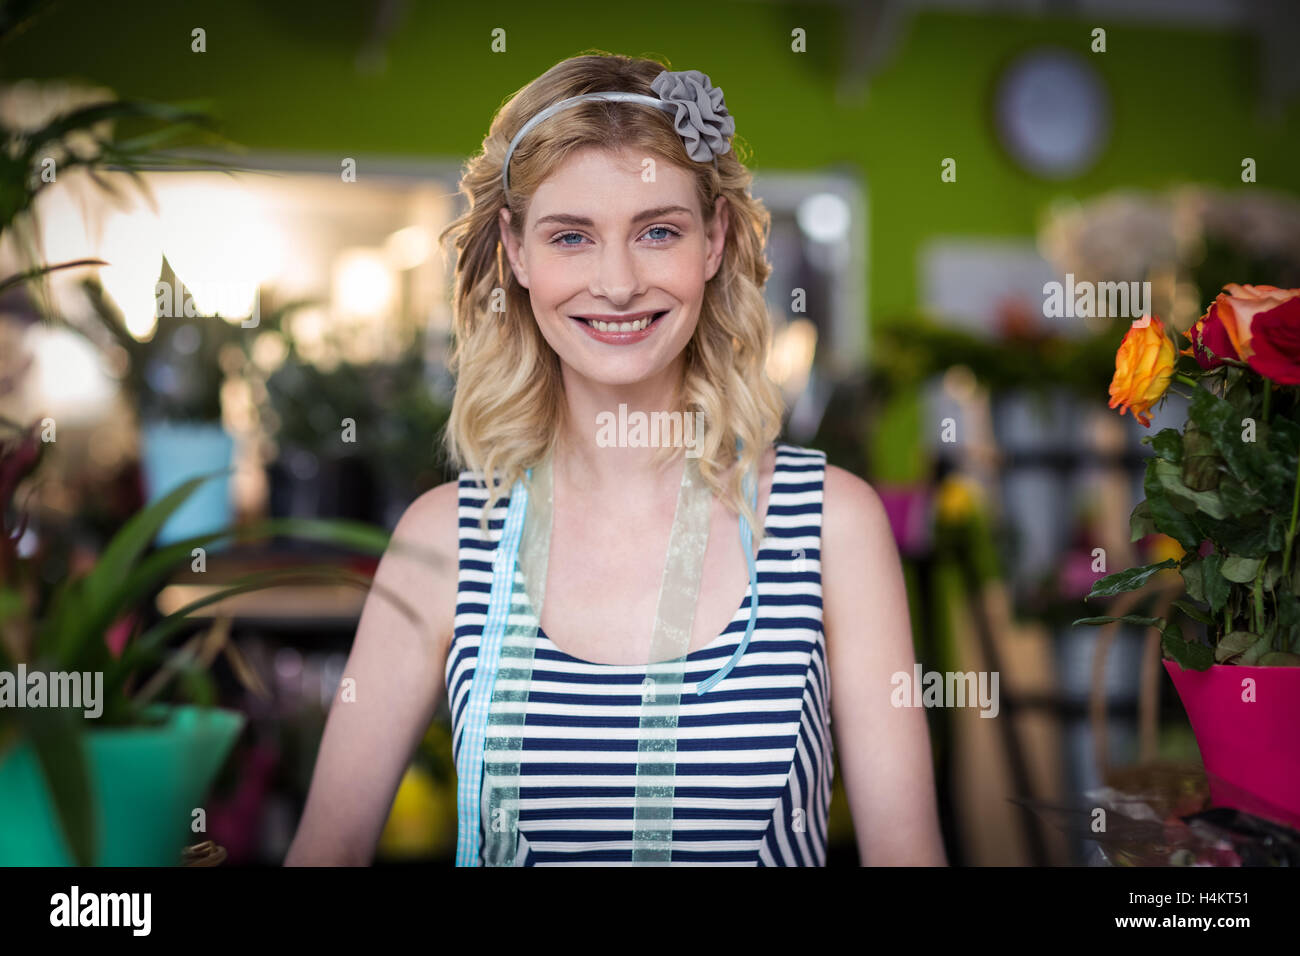 Portrait of female florist smiling Stock Photo